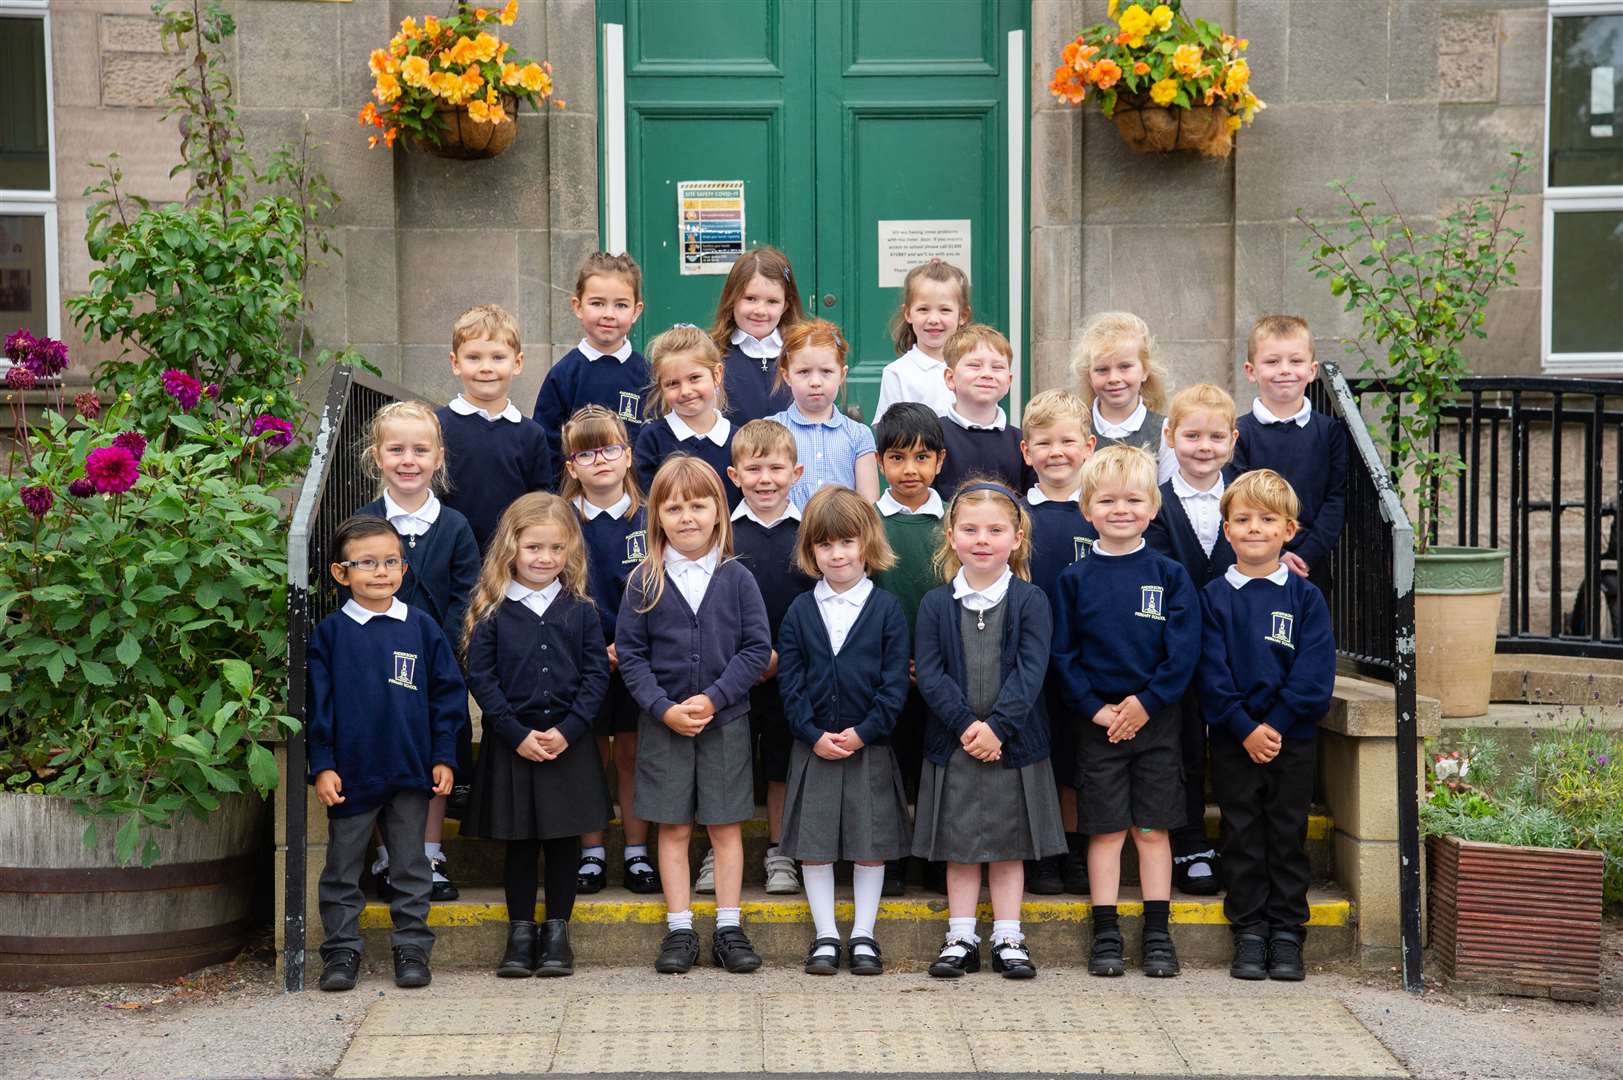 Anderson's Primary School Primary Ones.Picture: Daniel Forsyth